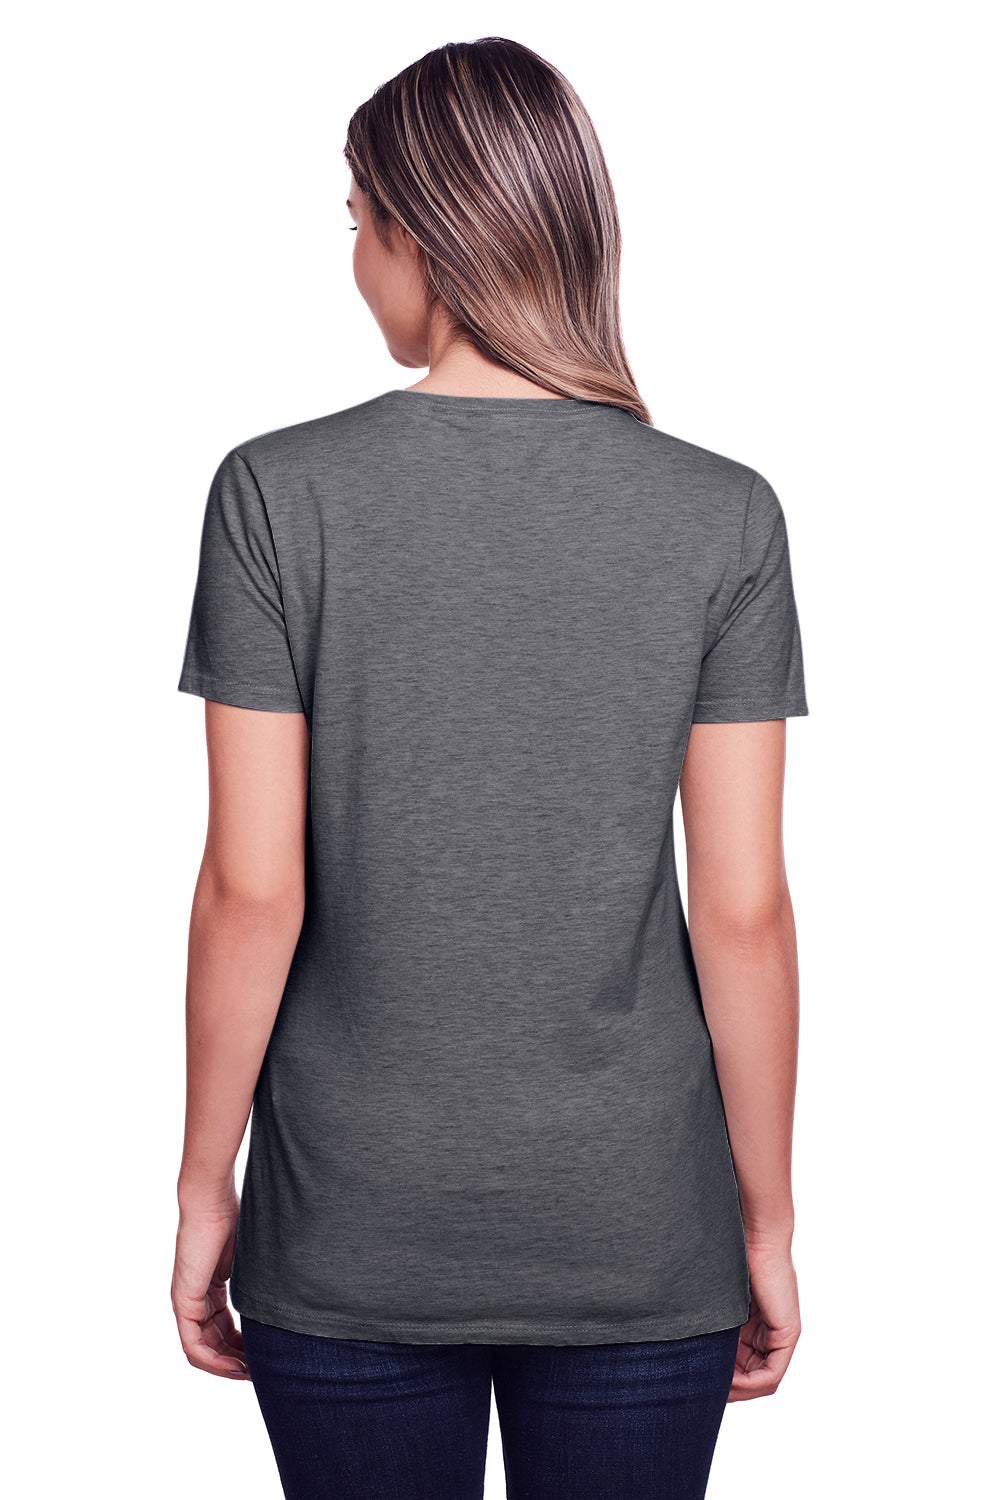 Fruit Of The Loom IC47WR Womens Iconic Short Sleeve Crewneck T-Shirt Heather Charcoal Grey Back